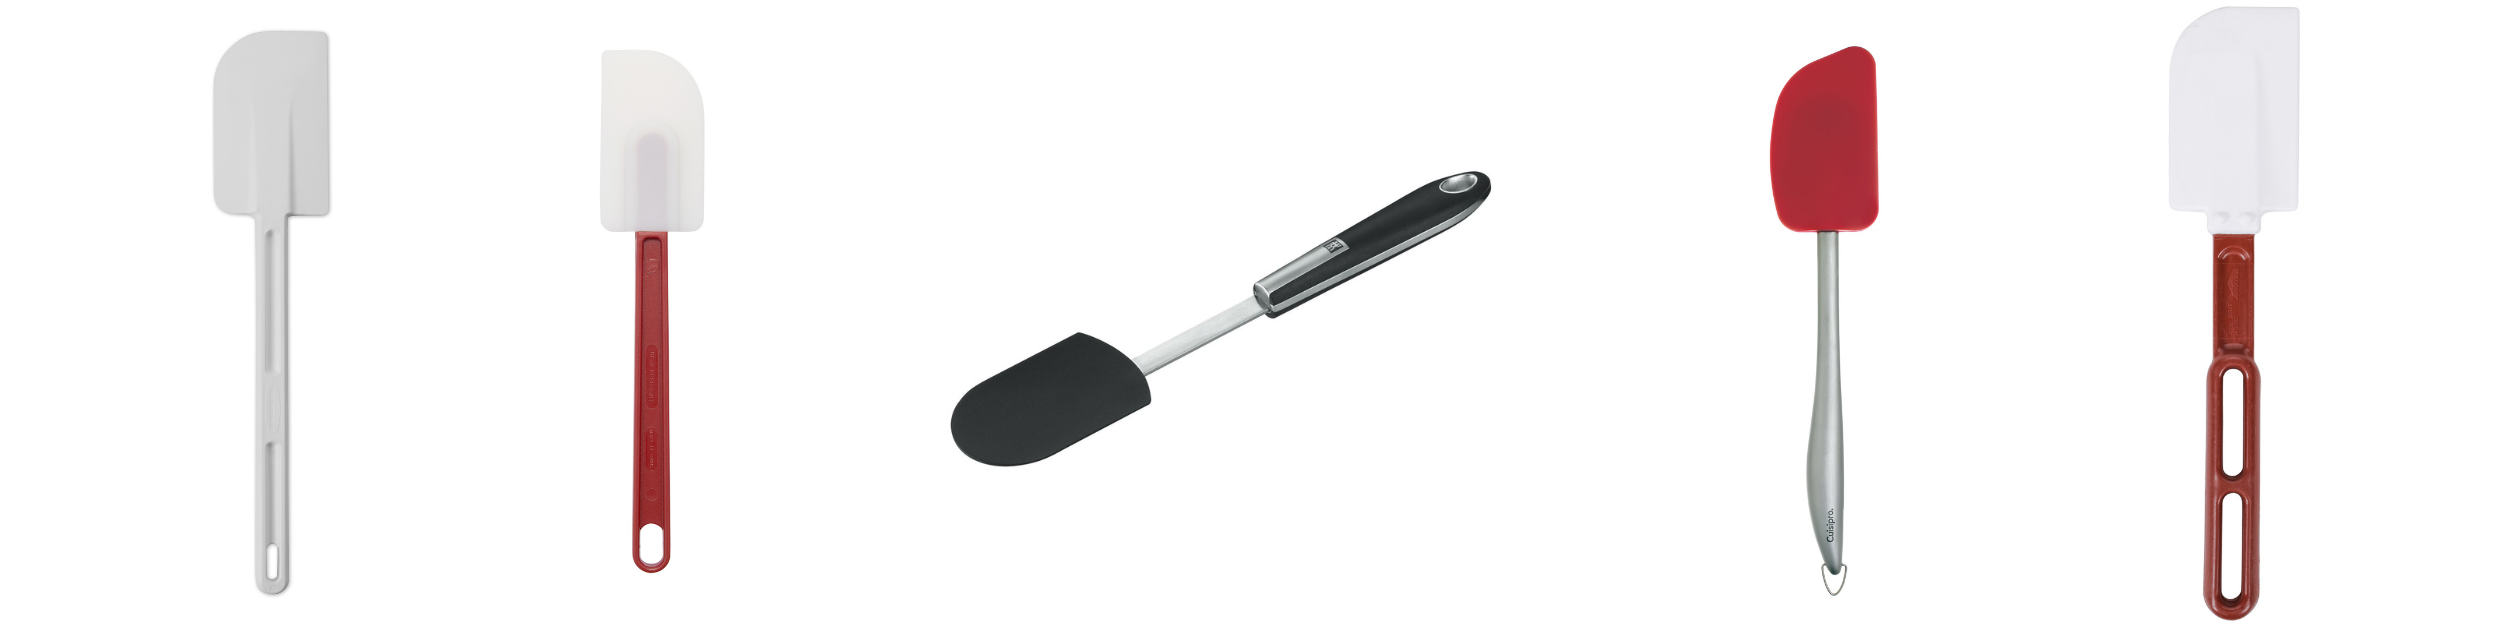 Types de spatules grattoirs